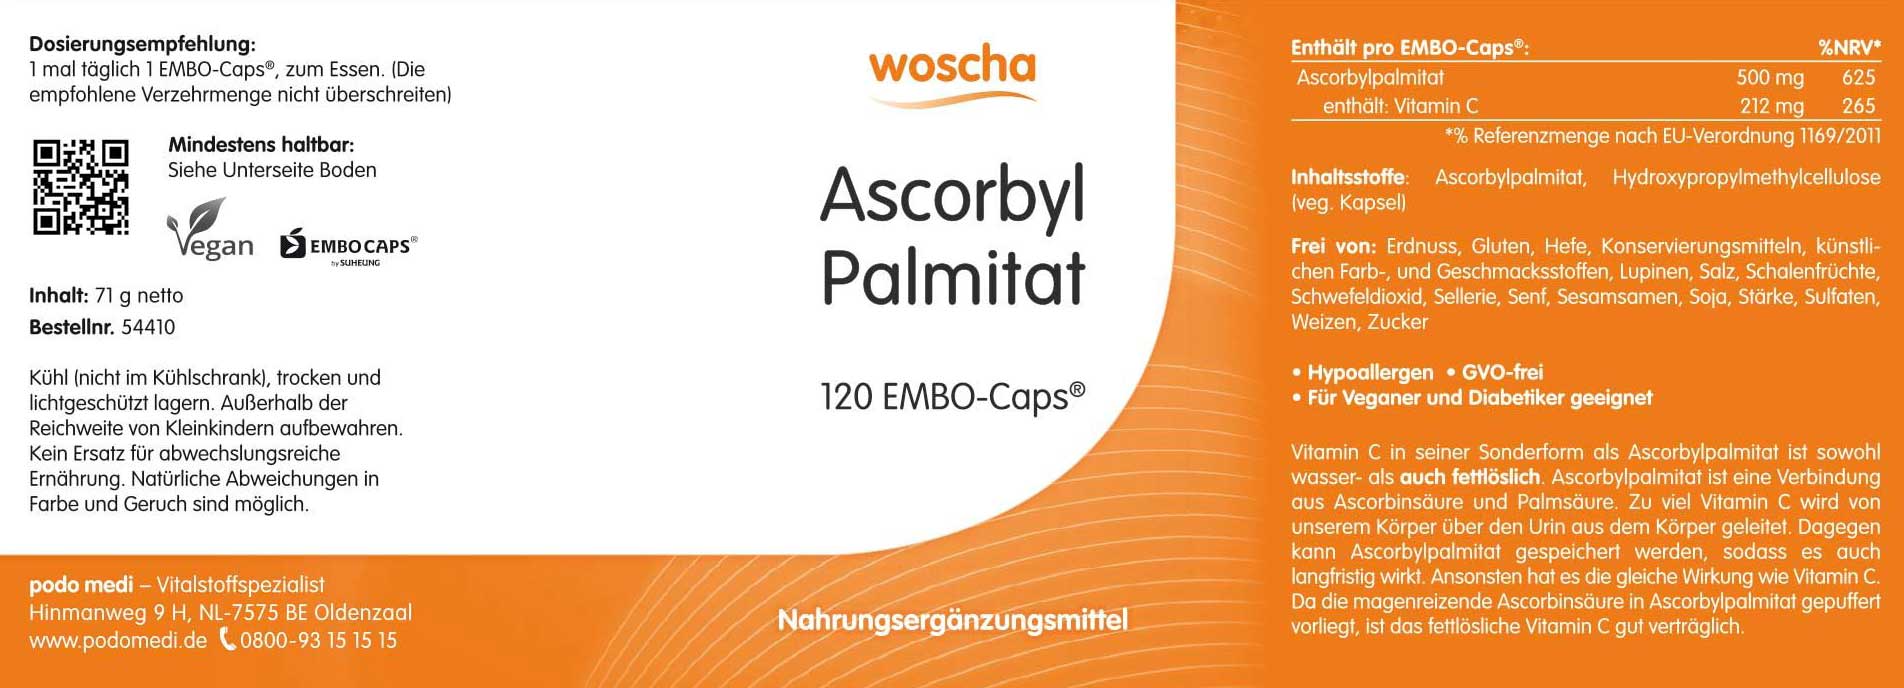 Woscha Ascorbyl Palmitat Vitamin C von podo medi beinhaltet 120 Kapseln Etikett